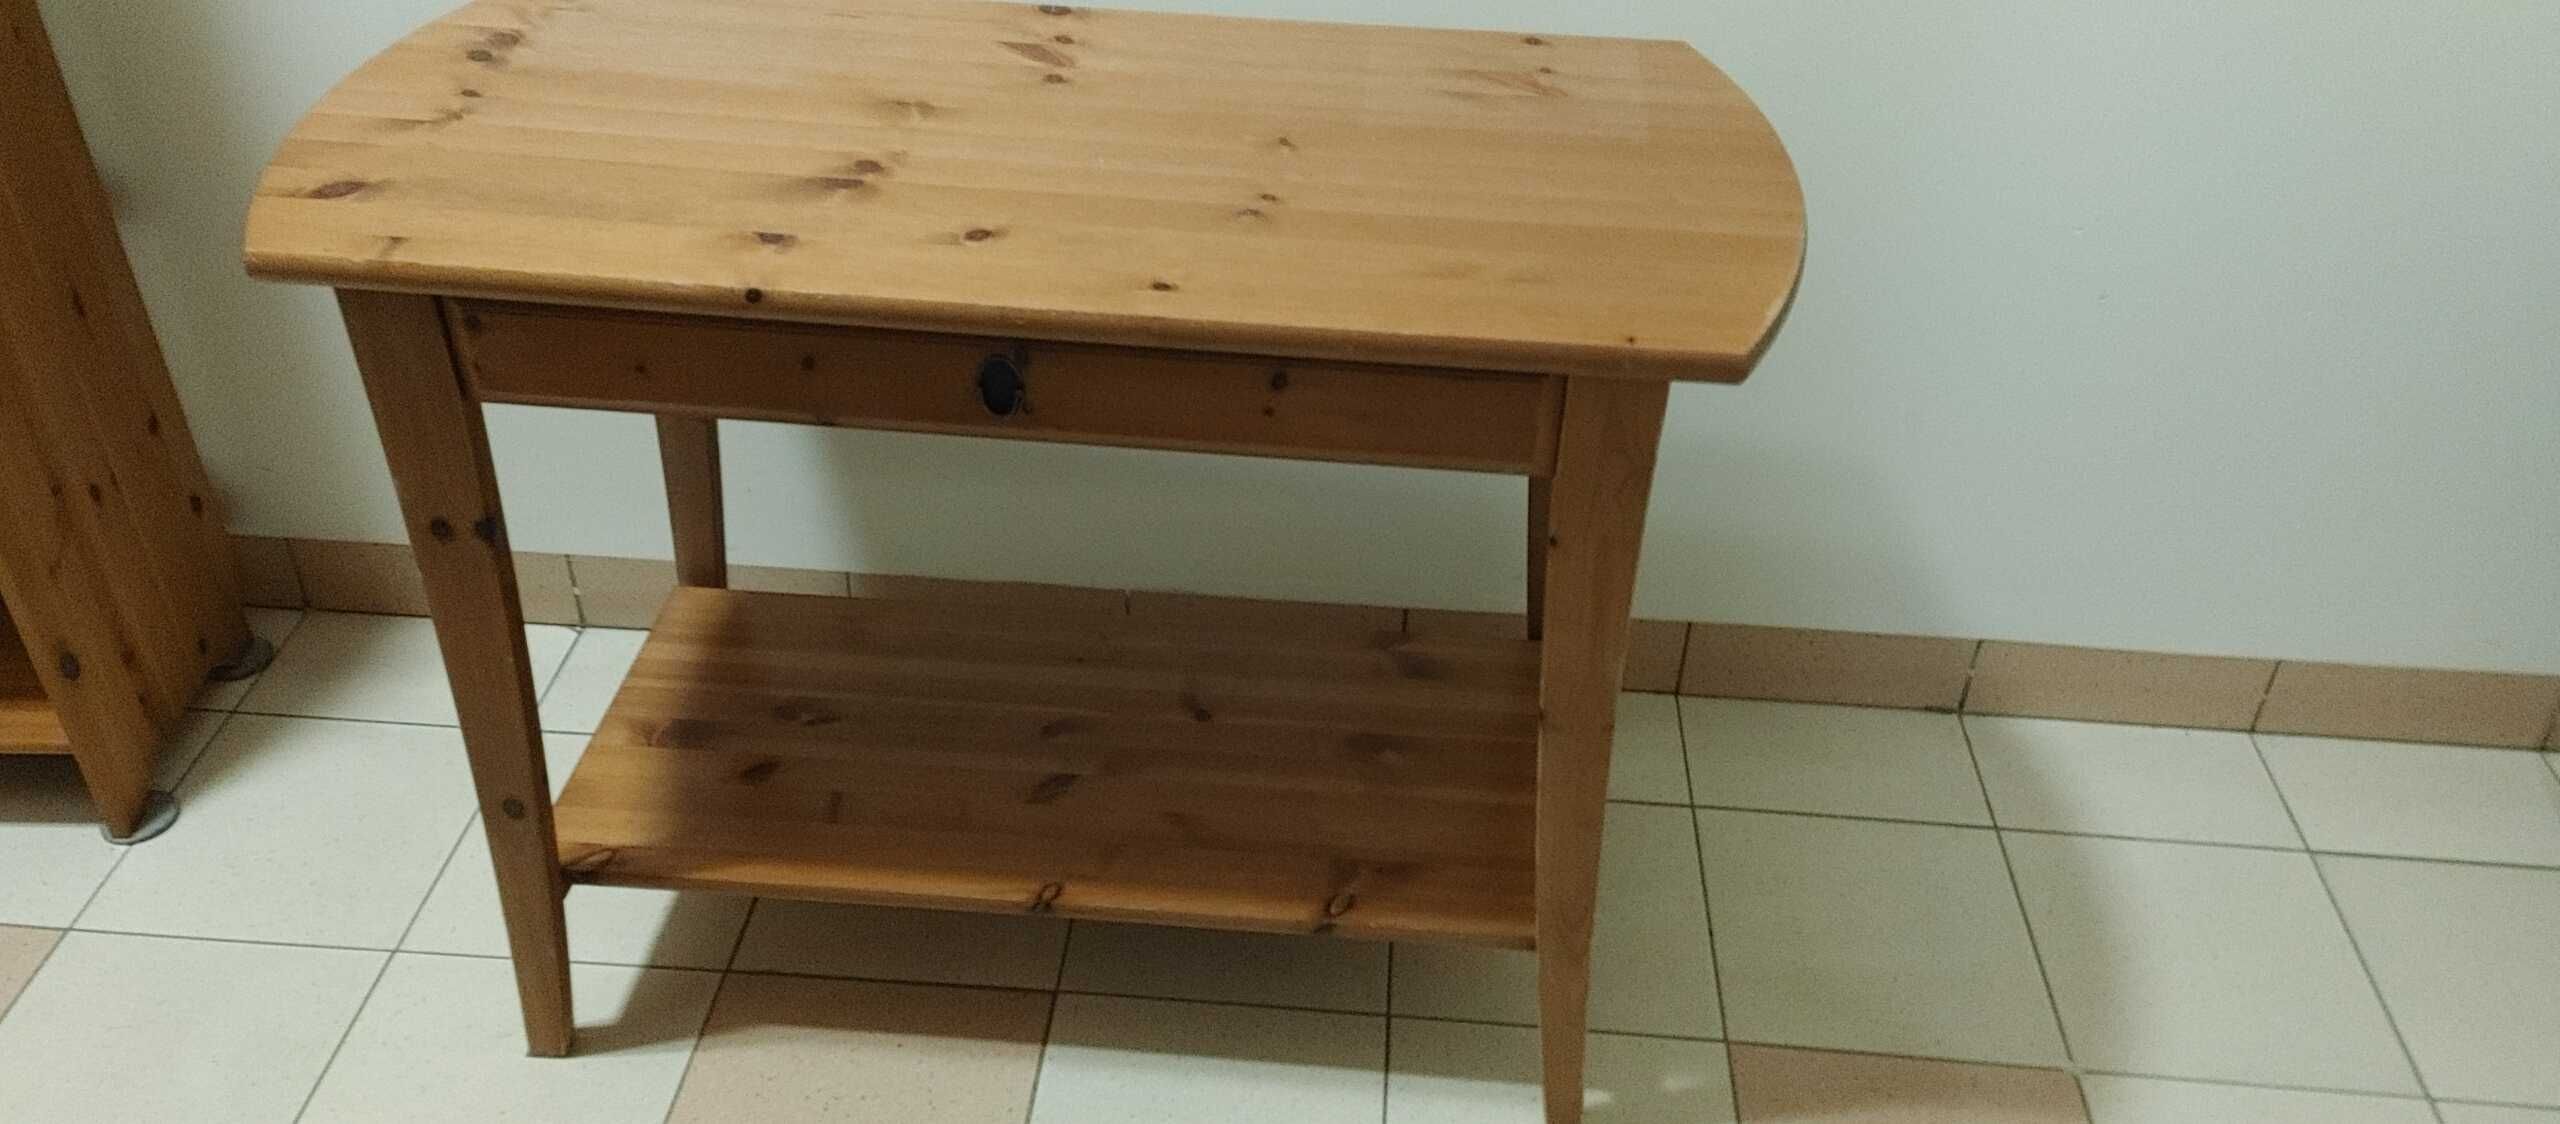 Konsolka-stół/konsolka IKEA Leksvik-drewno-stolik nocny-szafka